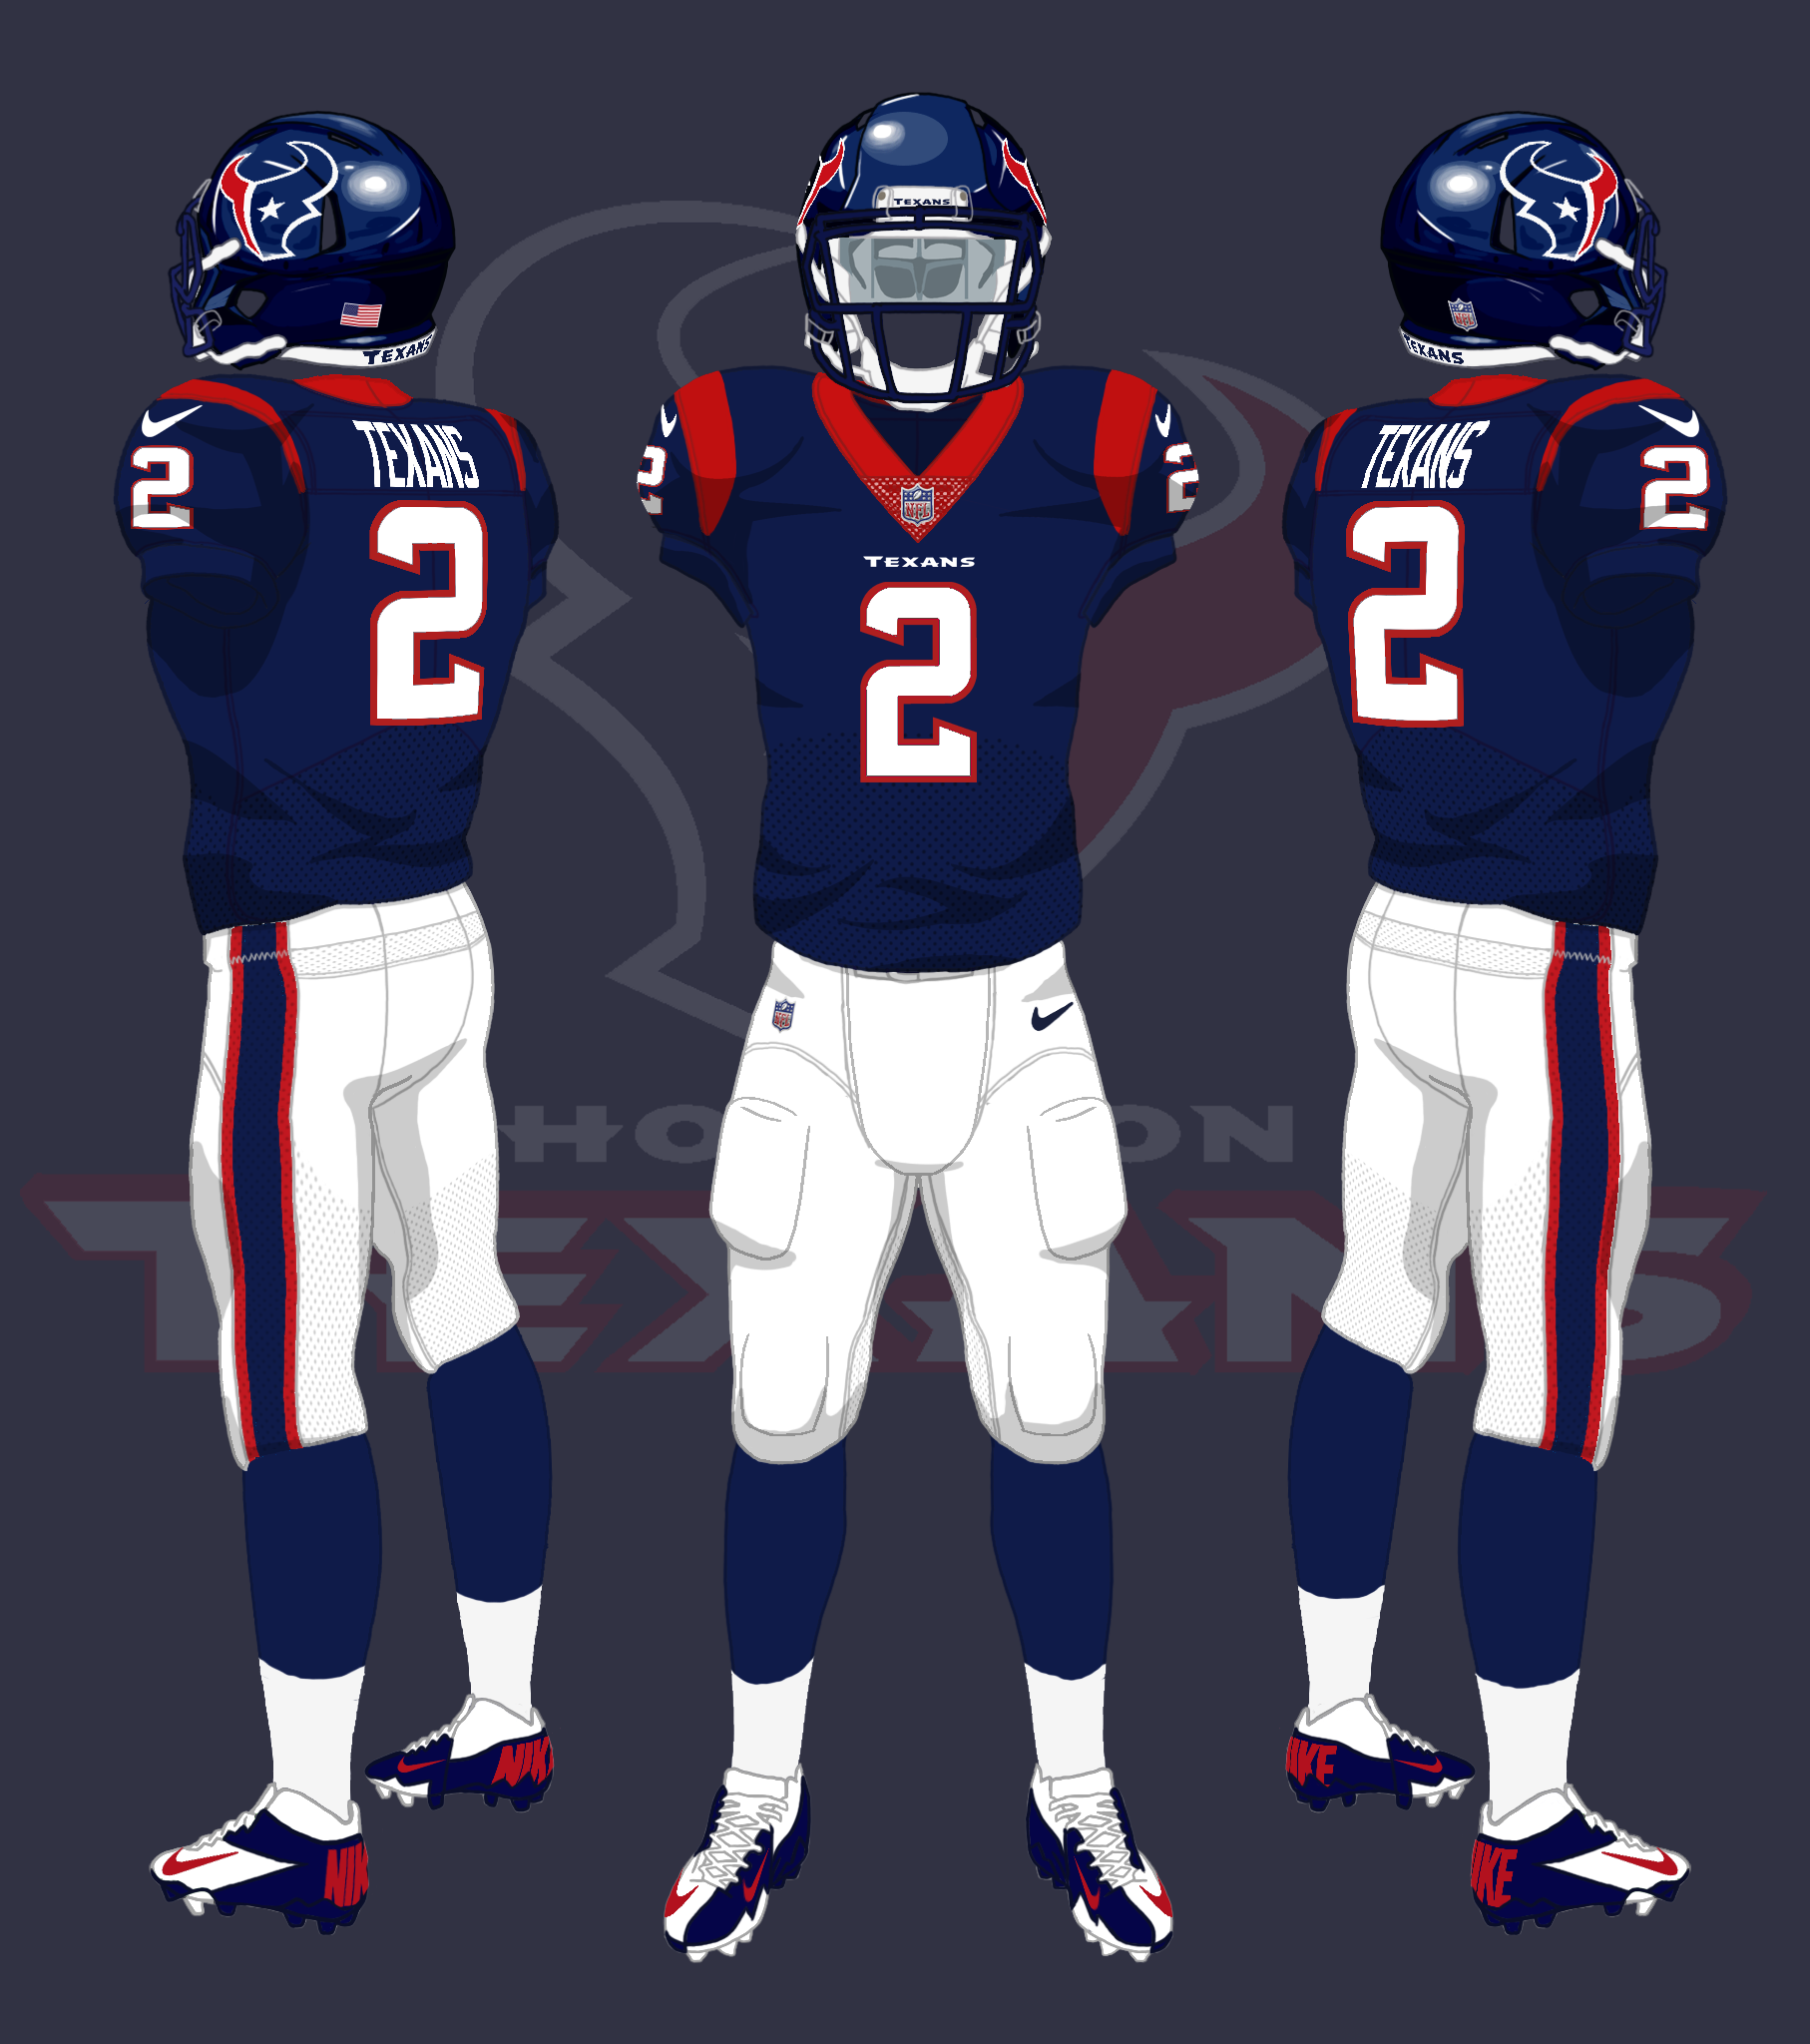 Houston Texans uniforms by 